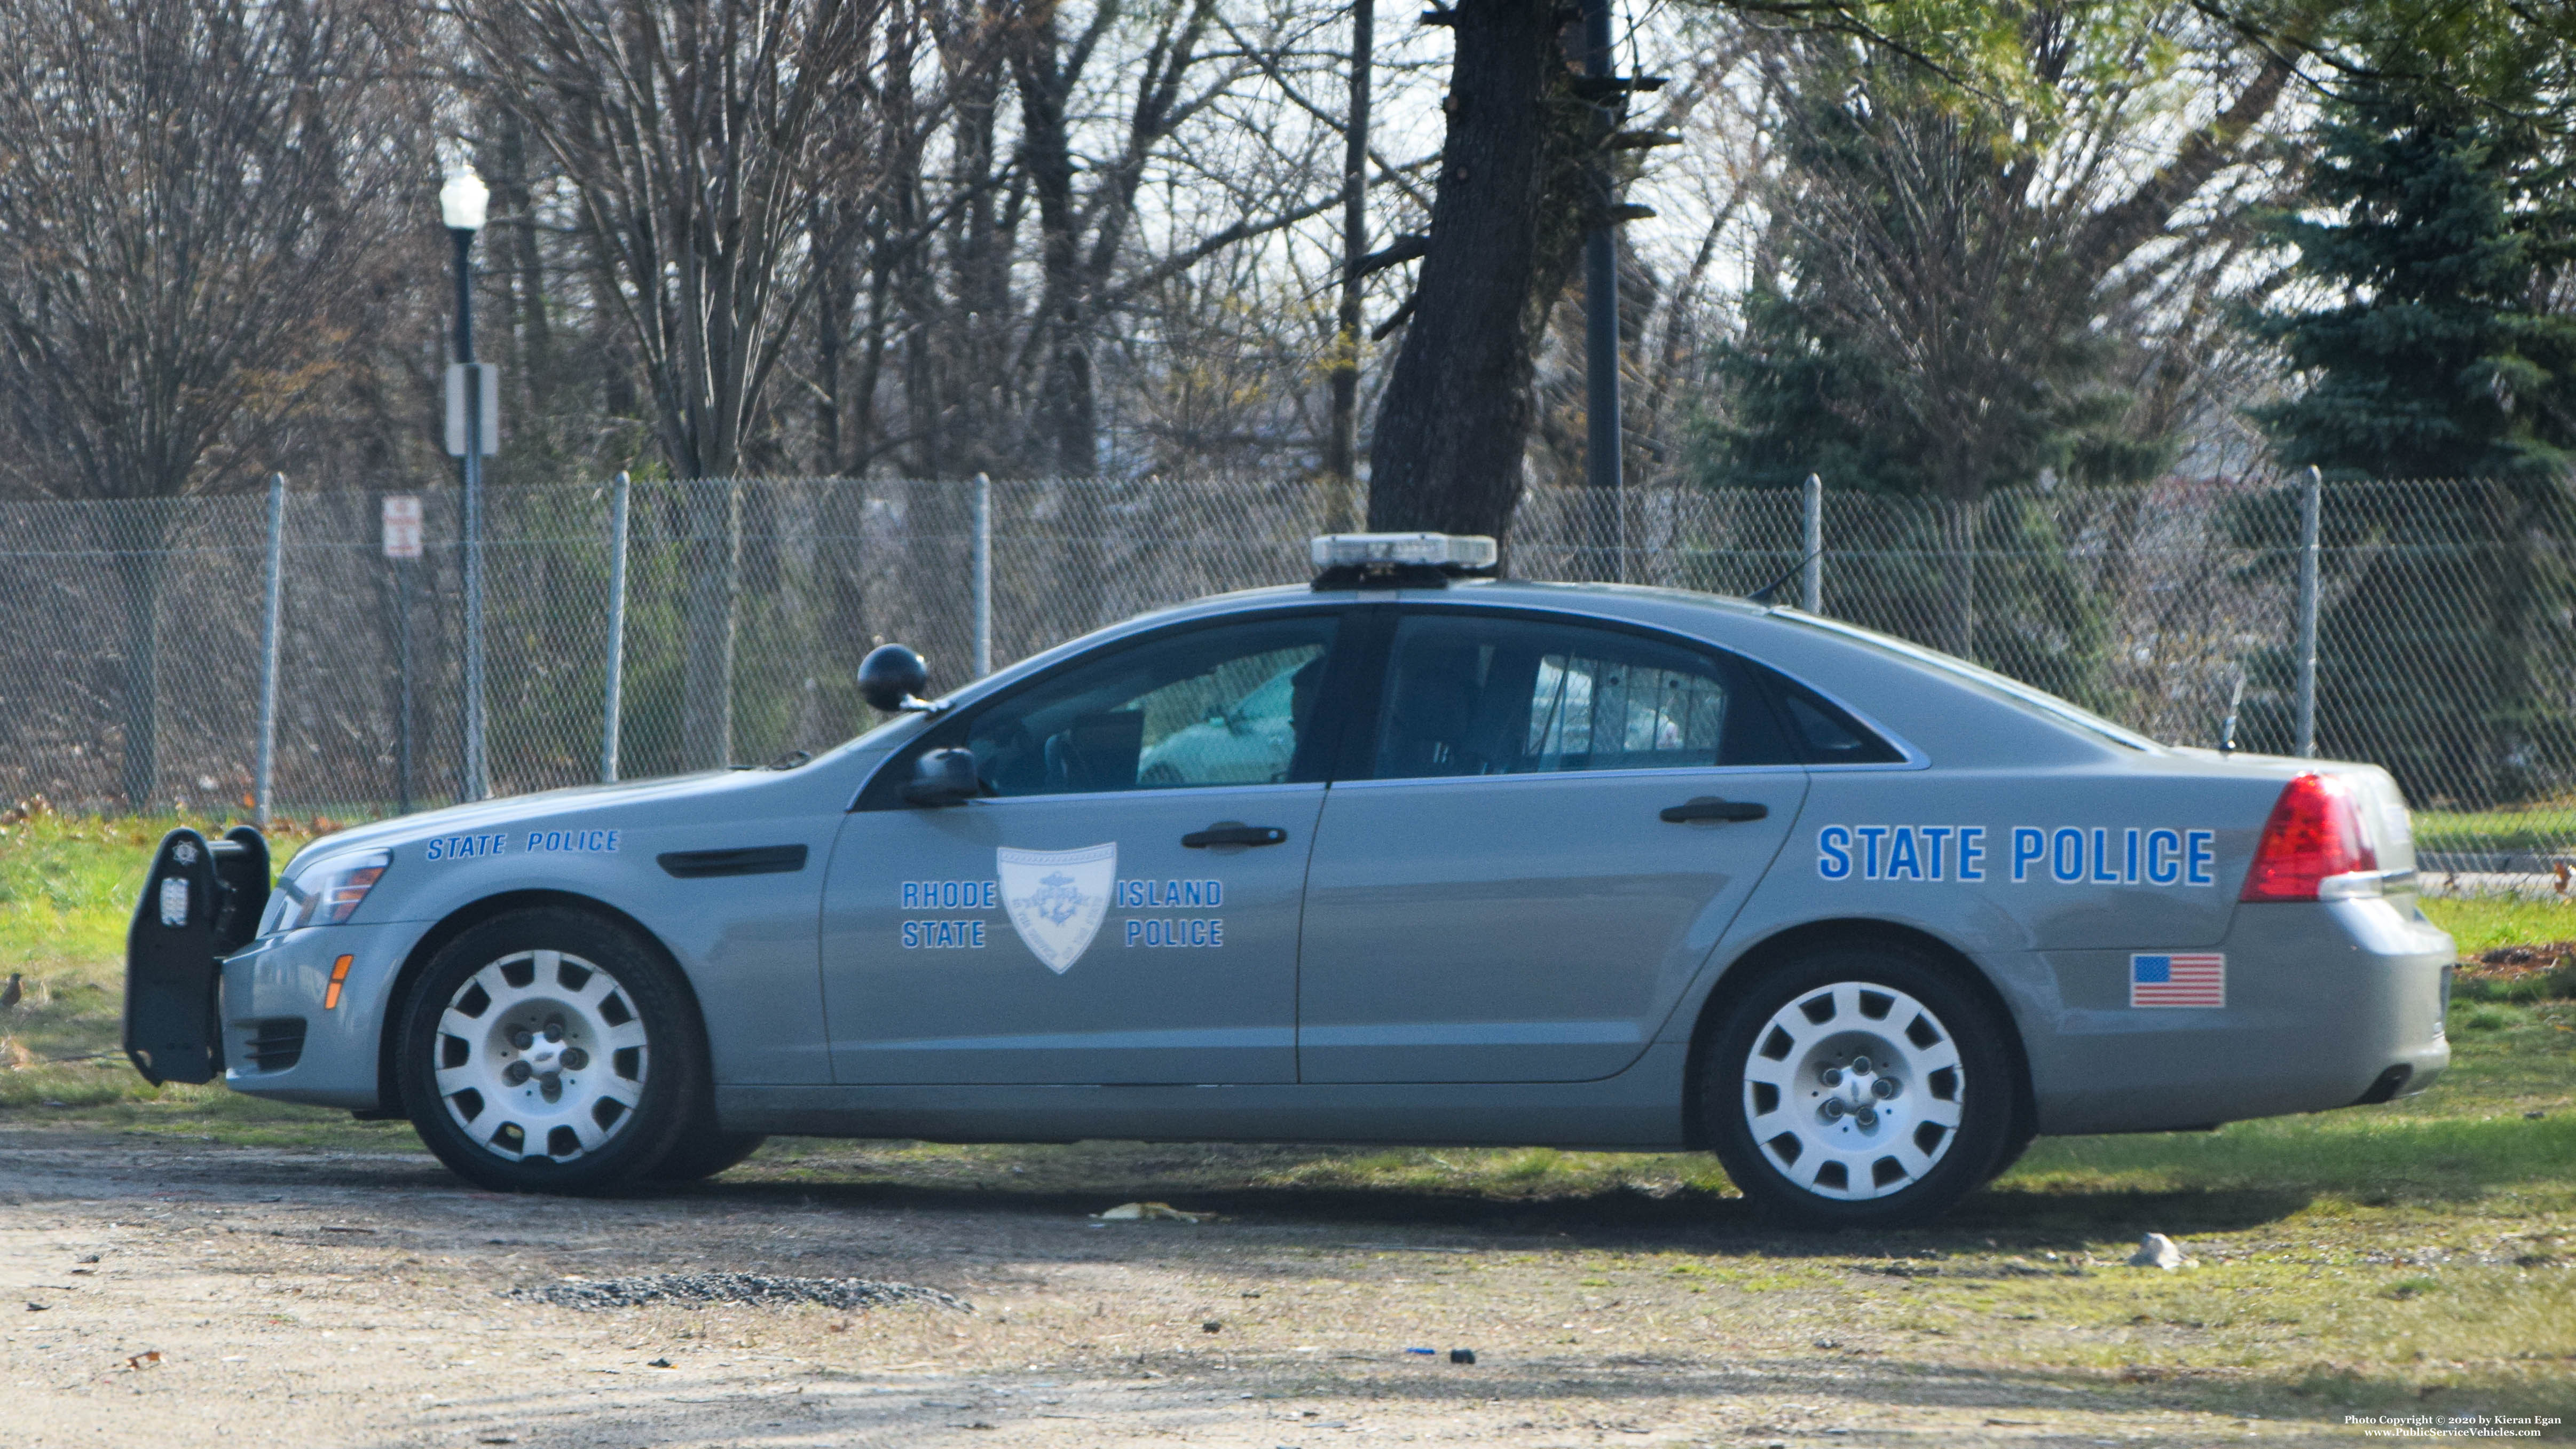 A photo  of Rhode Island State Police
            Cruiser 178, a 2013 Chevrolet Caprice             taken by Kieran Egan